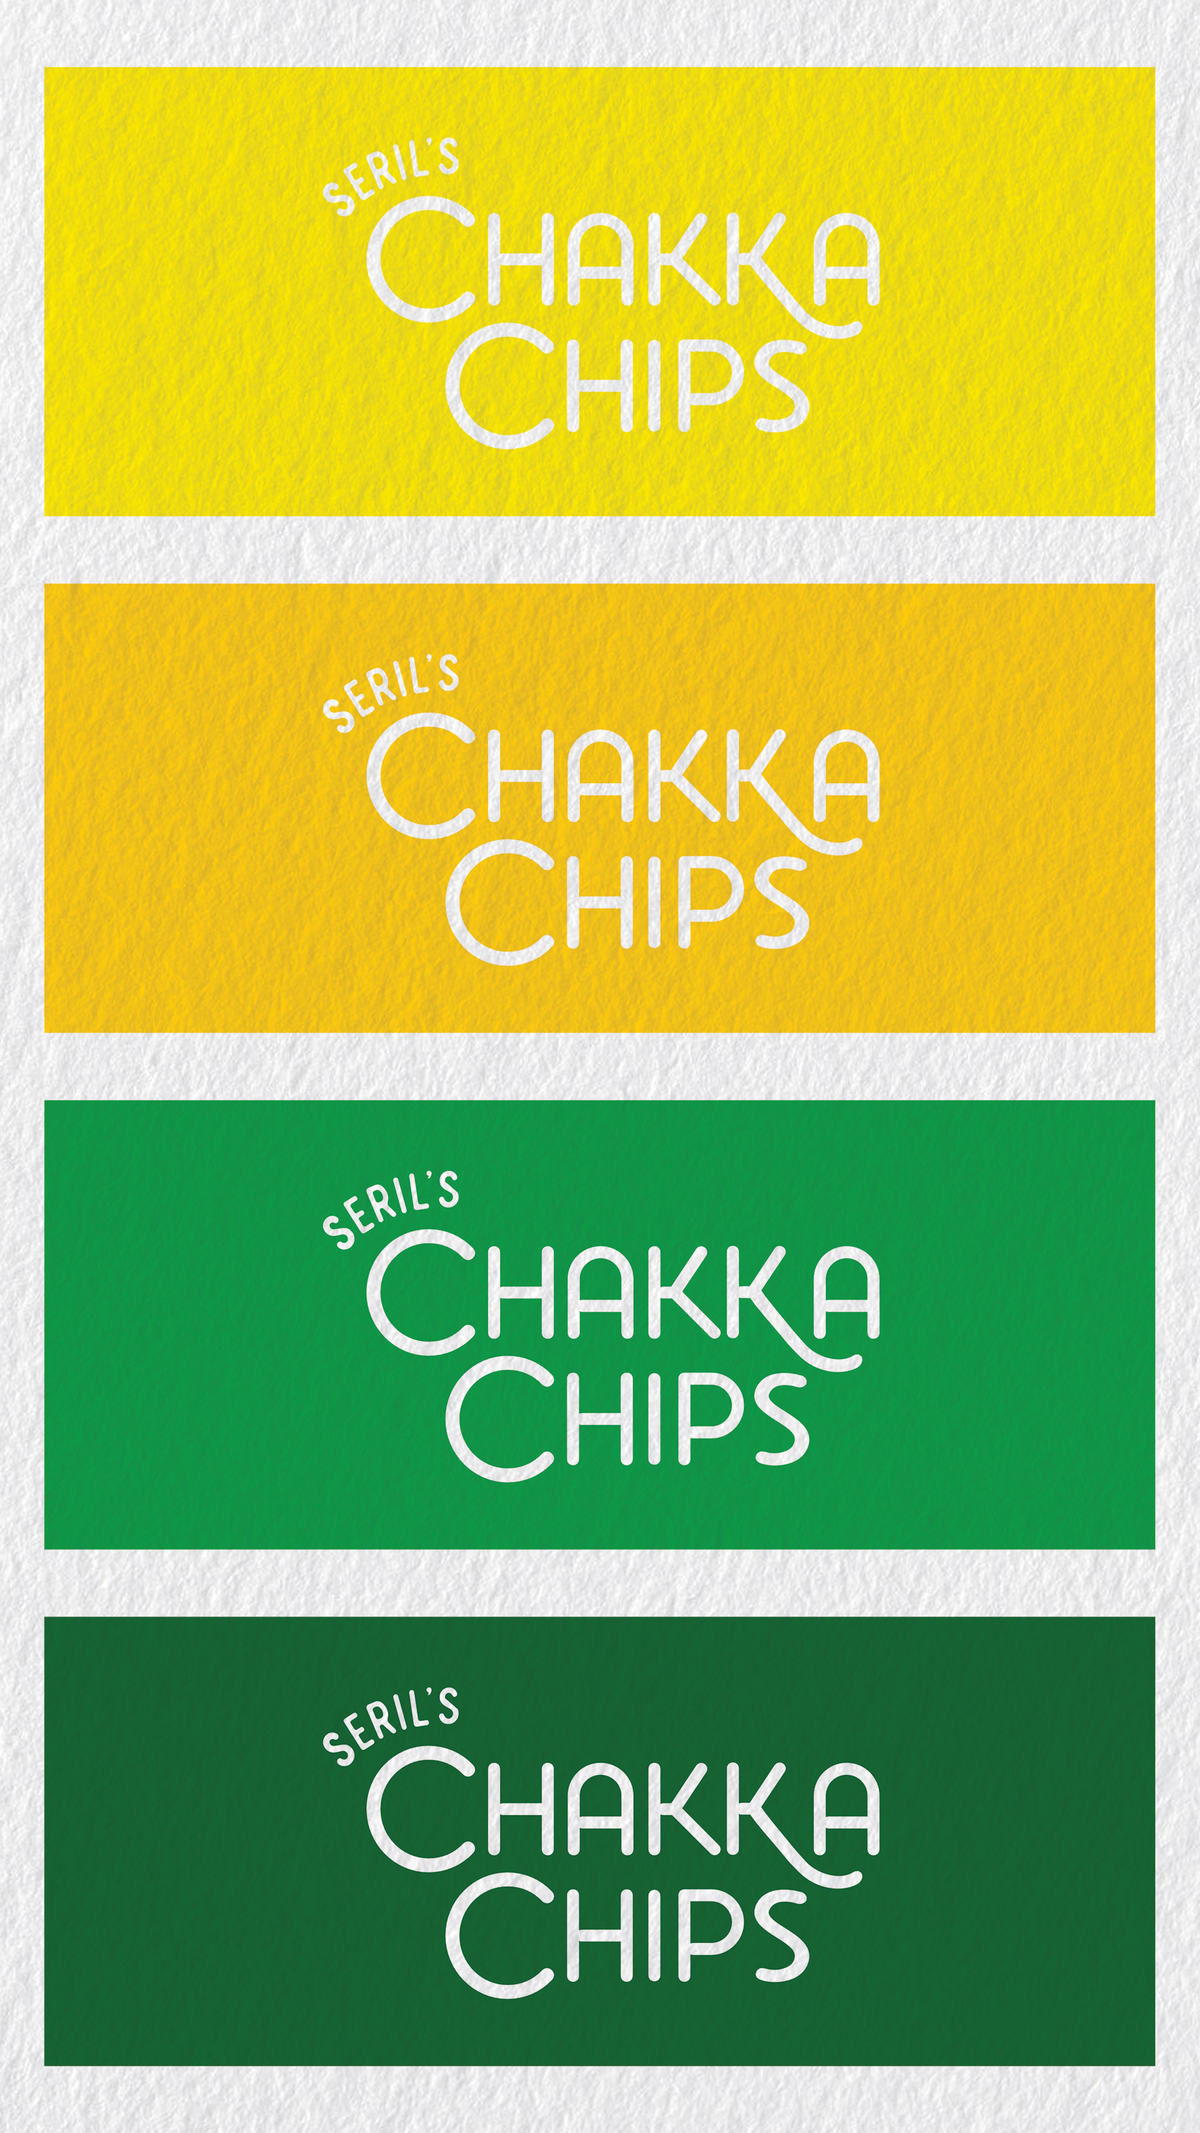 ChakkaChips_colorpalette_b